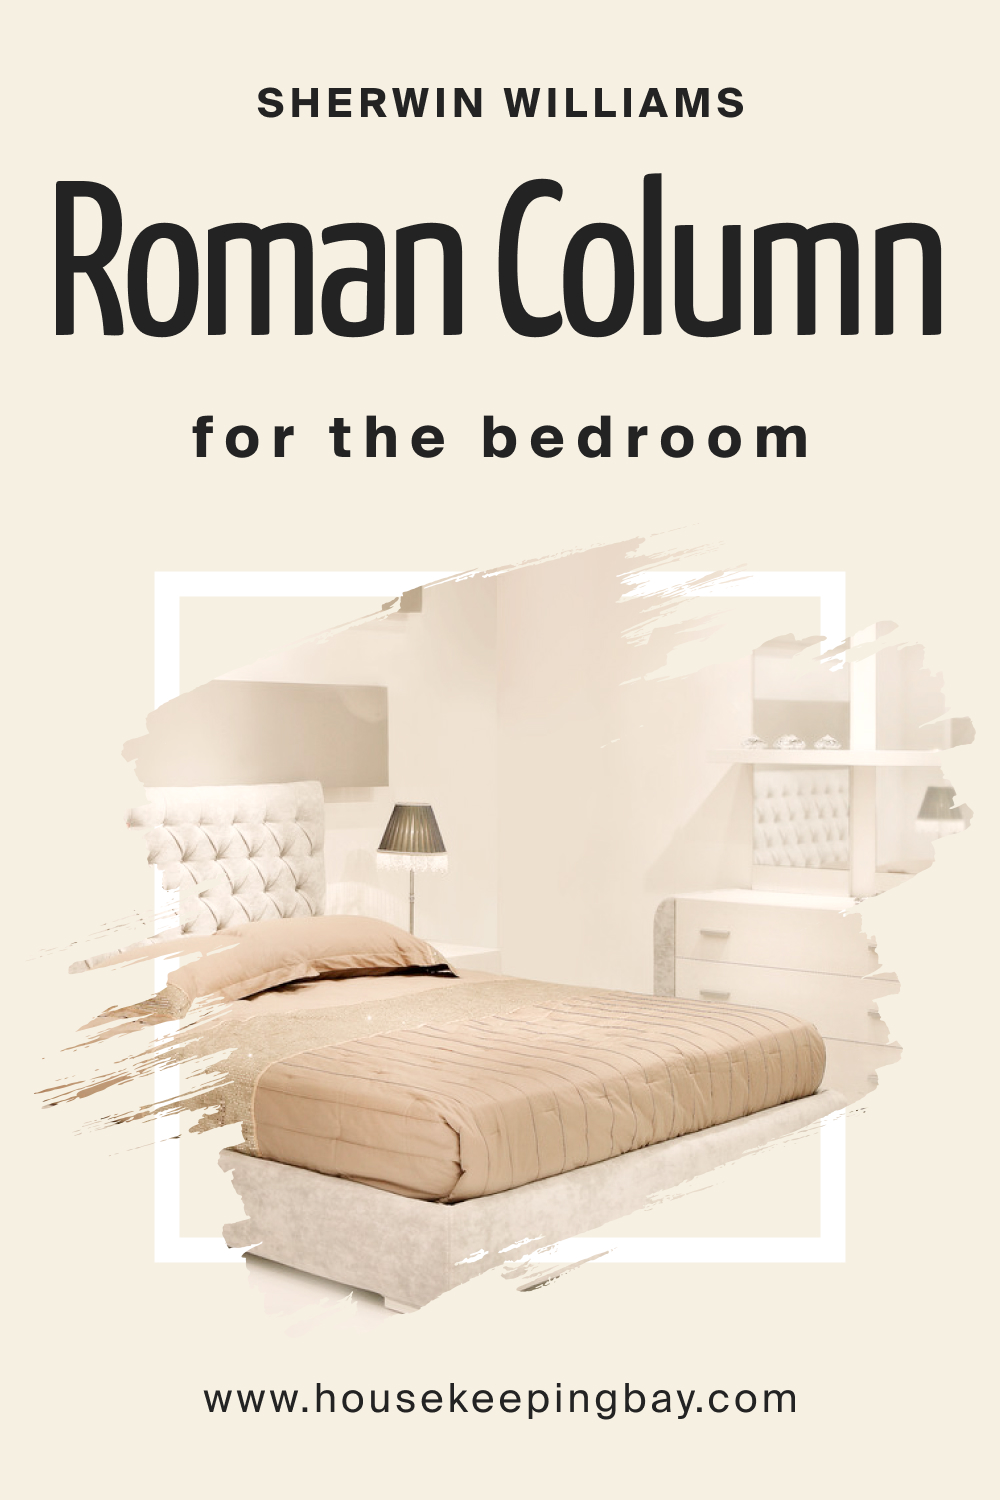 Sherwin Williams. SW Roman Column For the bedroom